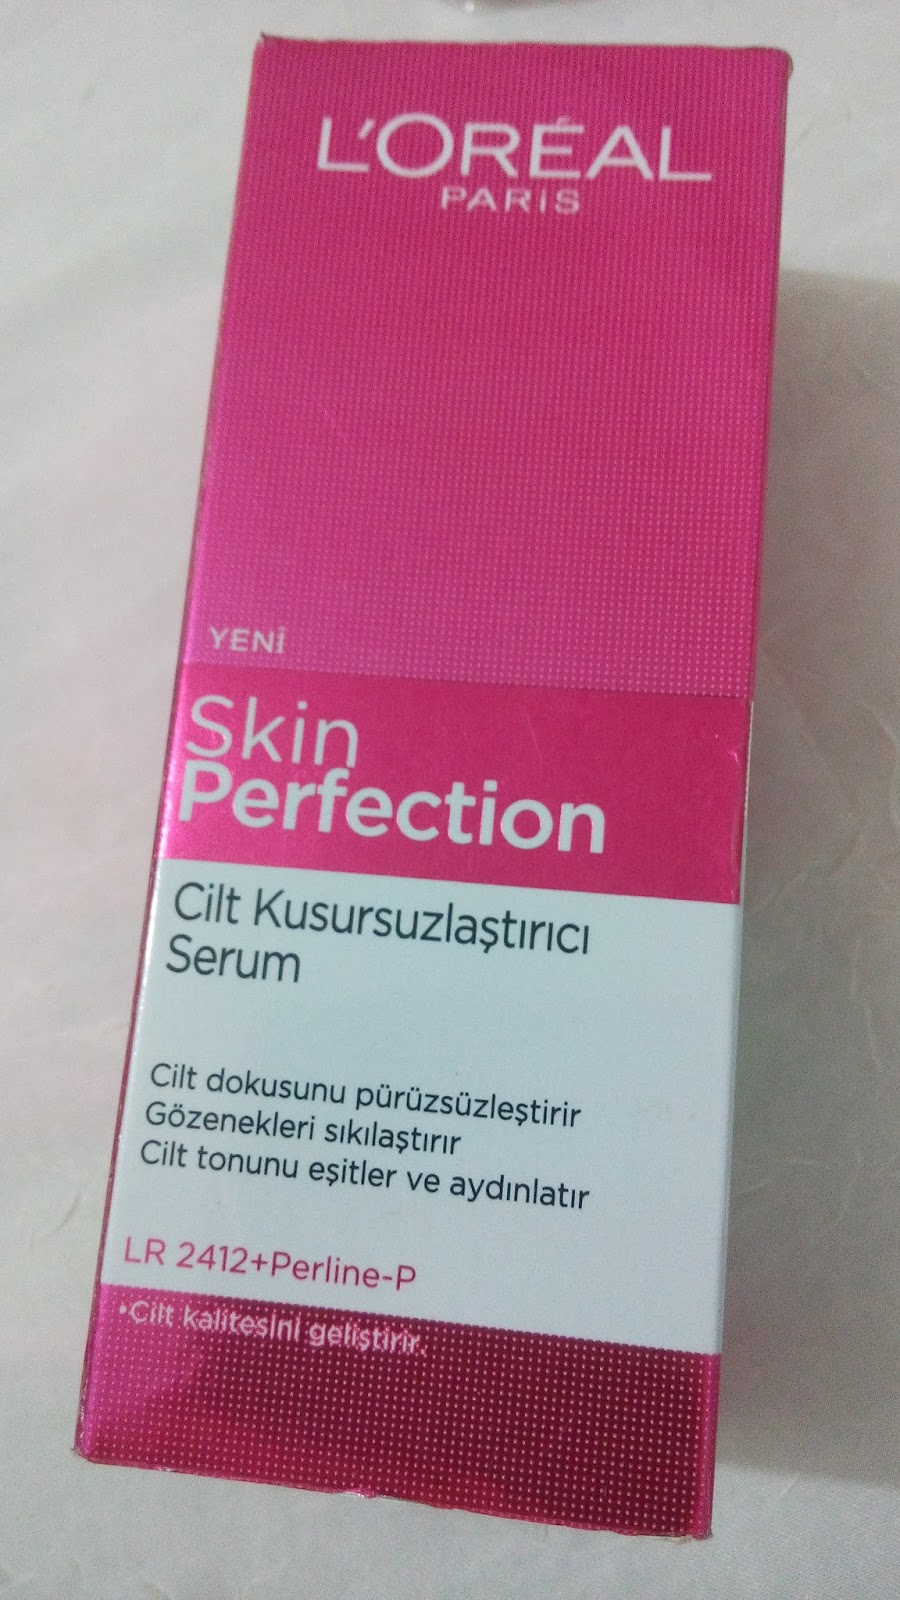 Skin perfection